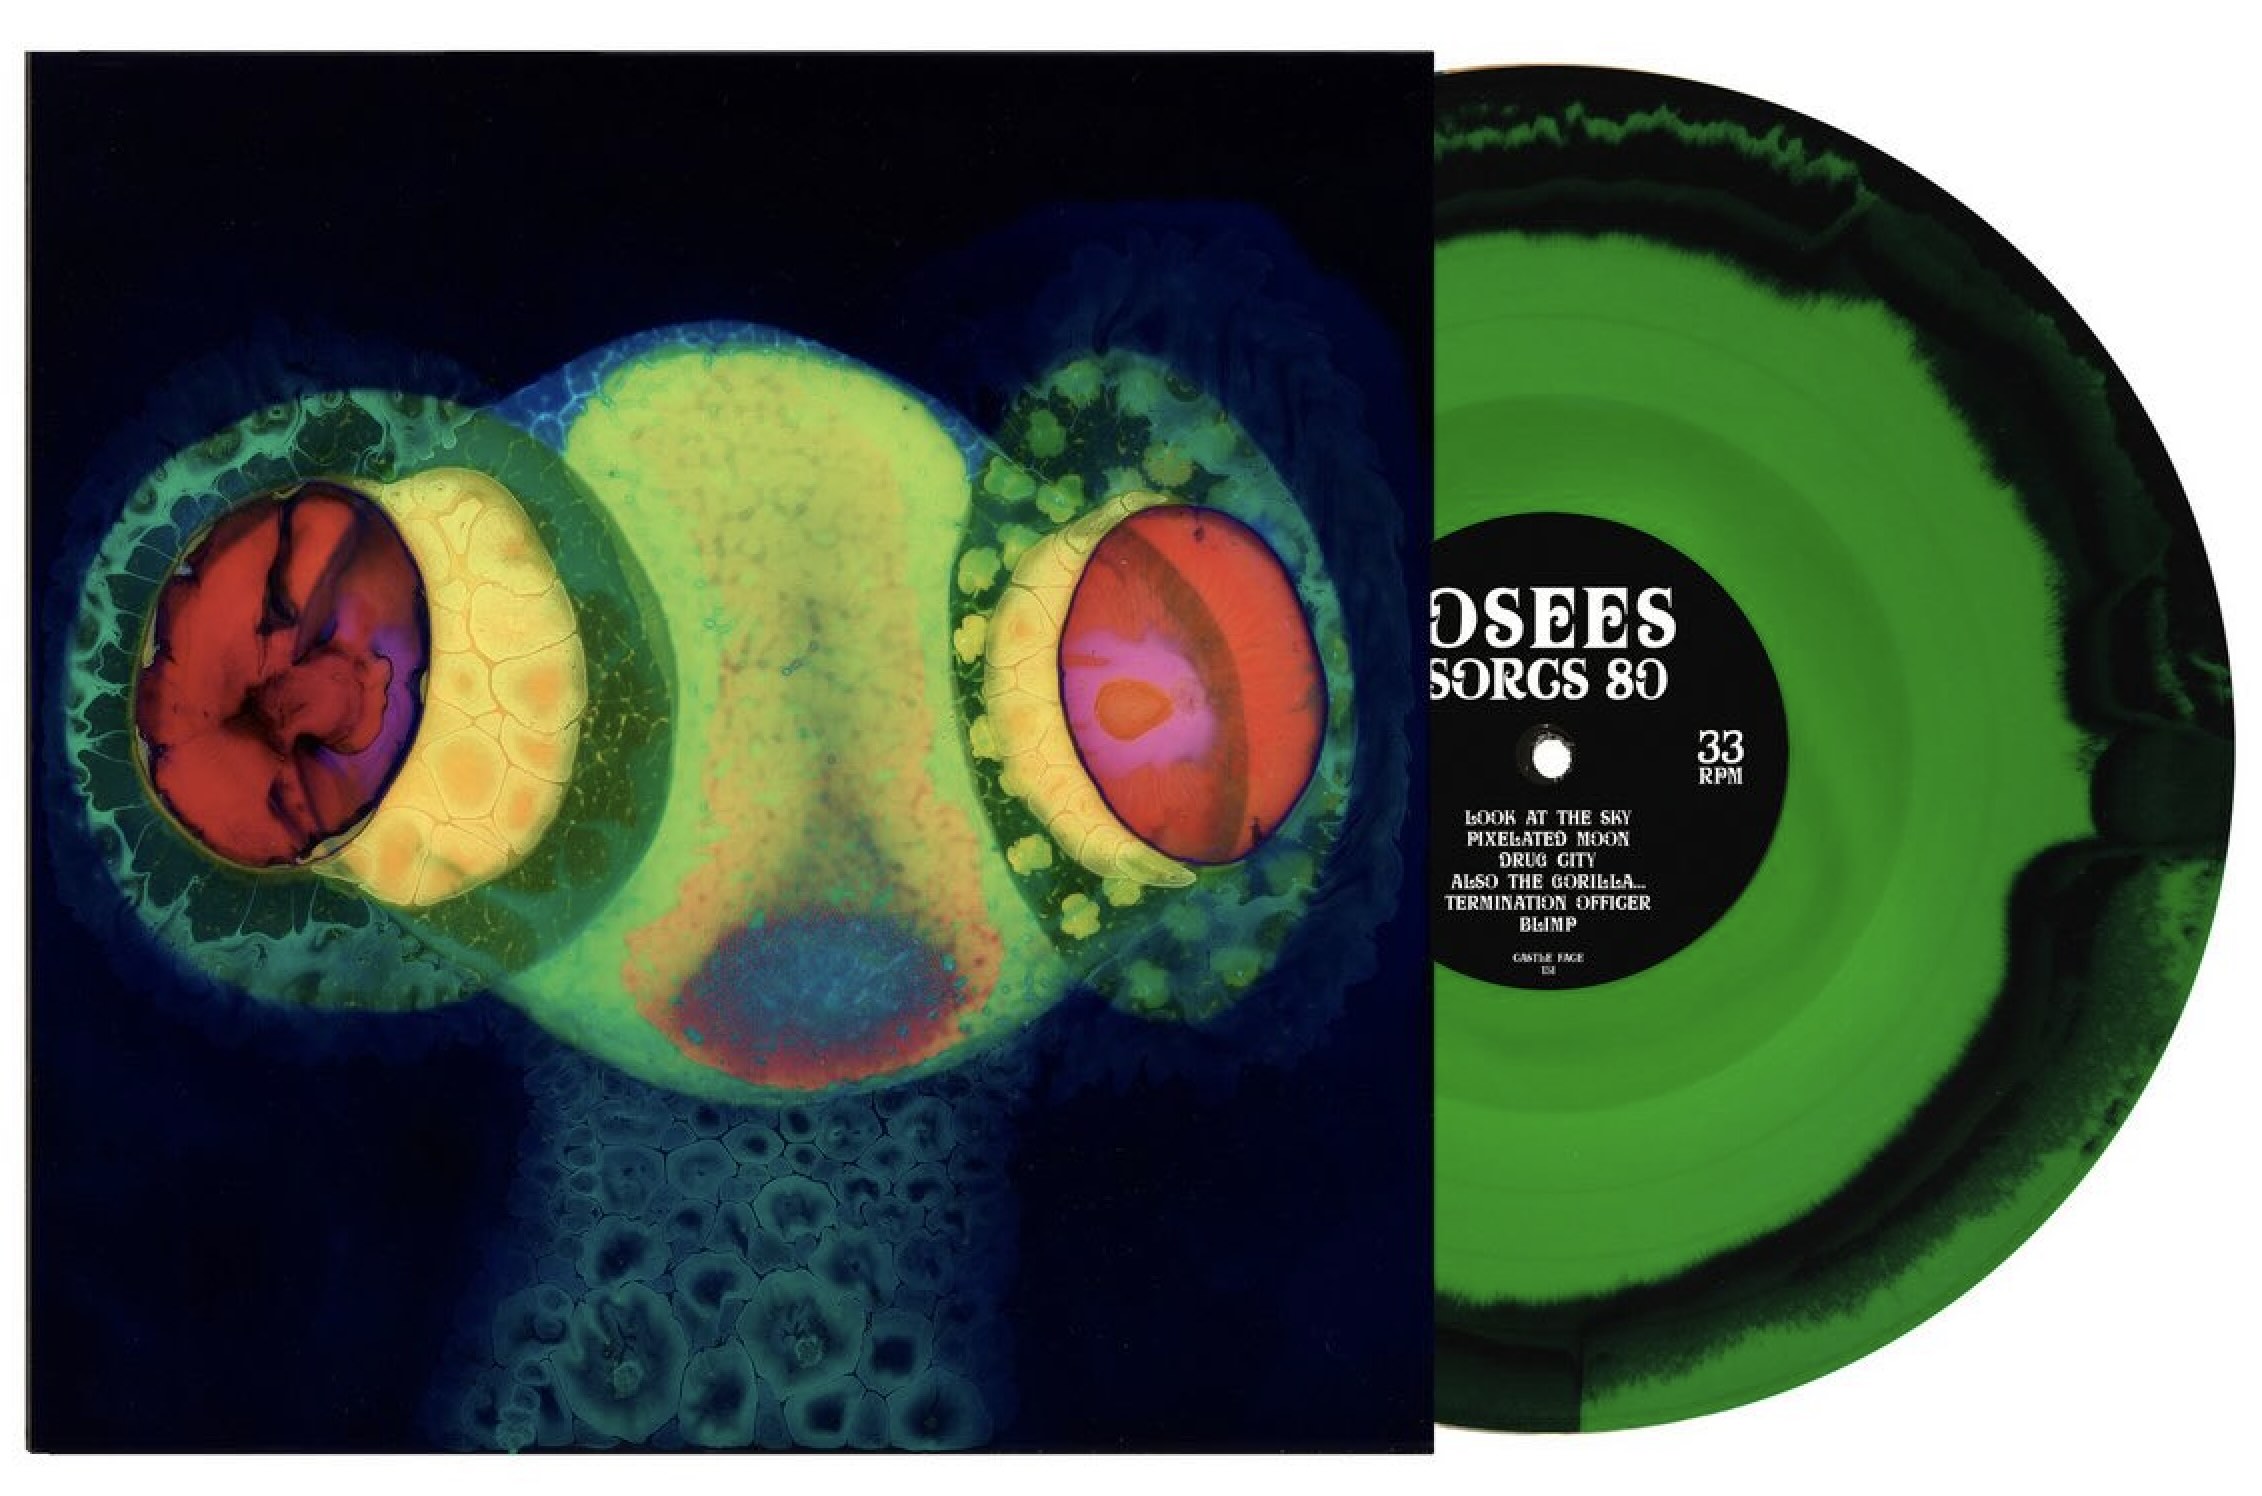 OSEES album SORCS 80 on "Neon Green & Black" vinyl